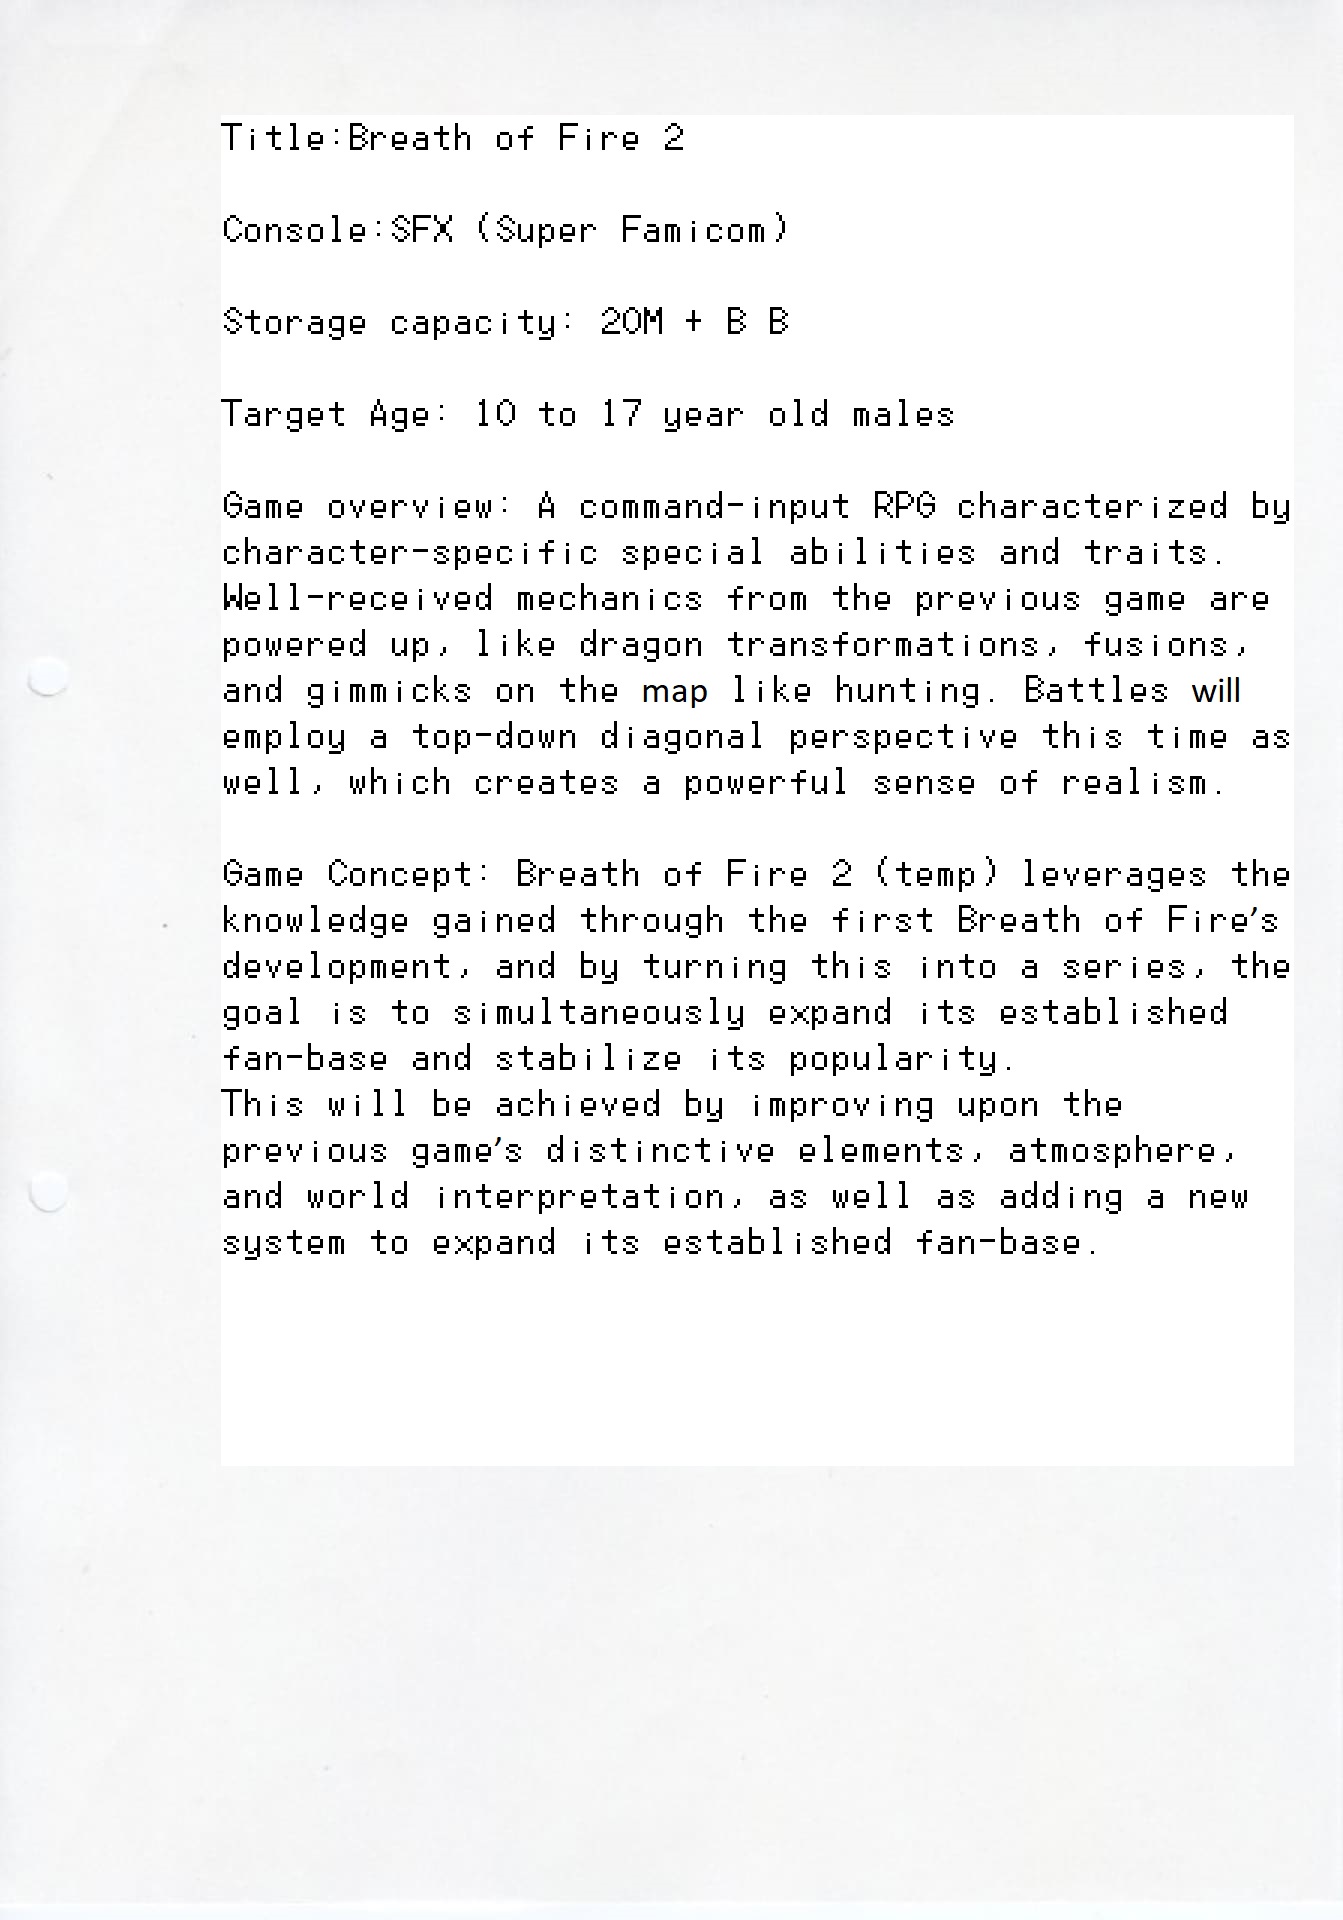 Breath of Fire 2 Design Doc Page 2 / English